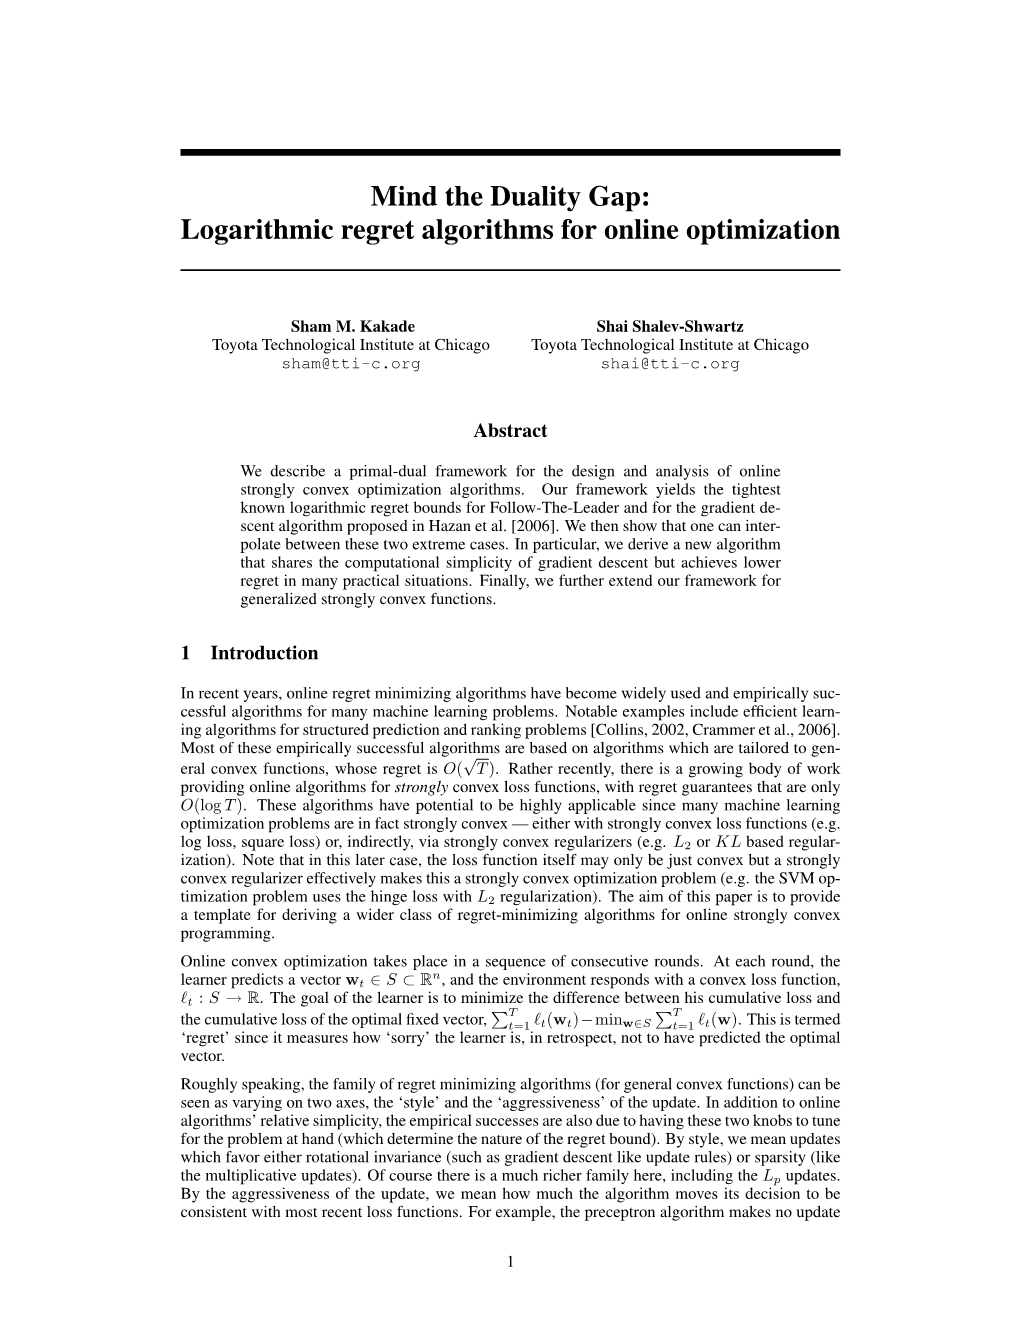 Mind the Duality Gap: Logarithmic Regret Algorithms for Online Optimization